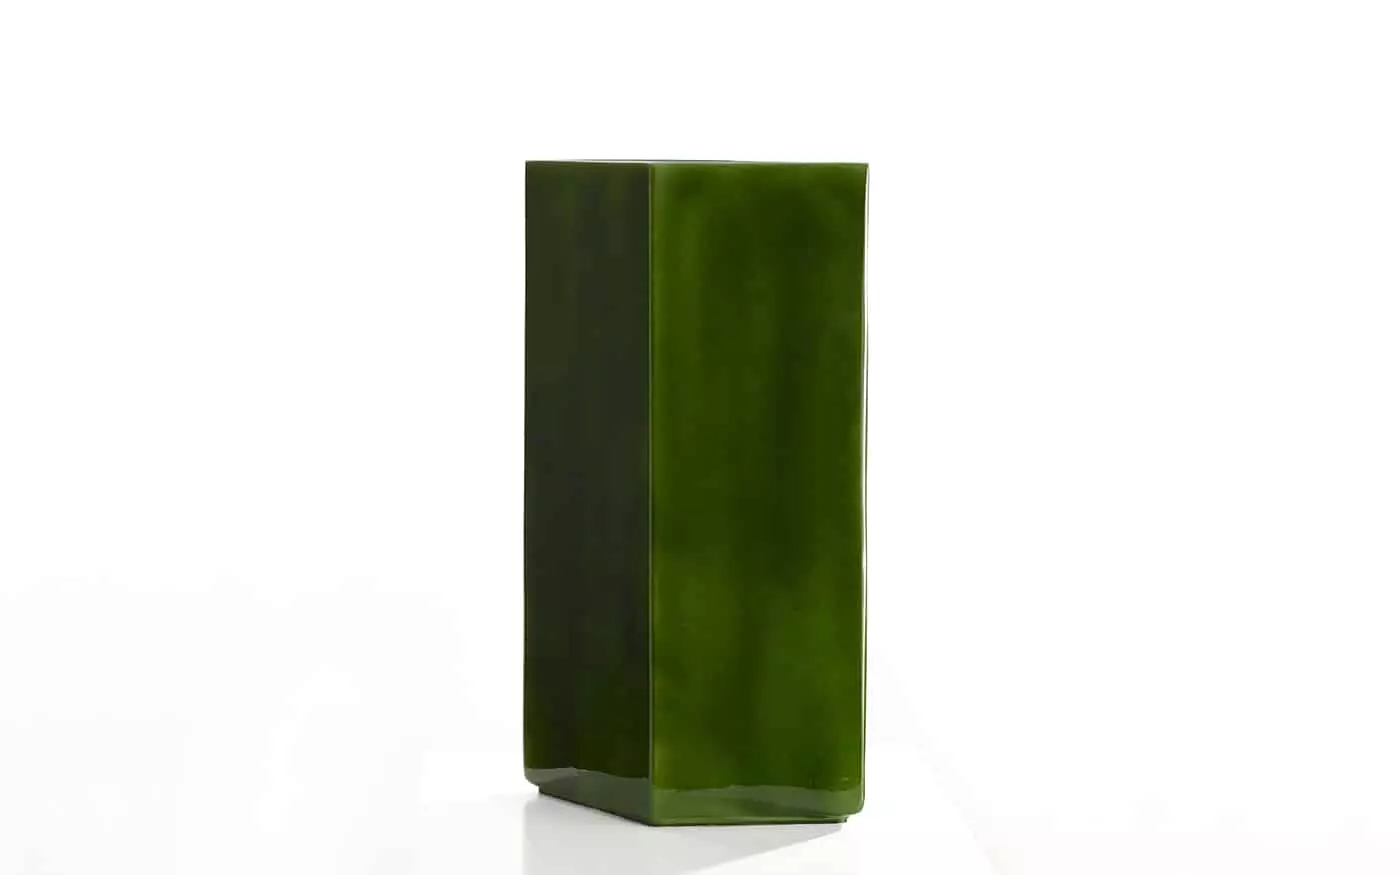 Vase Losange 84 green - Ronan and Erwan Bouroullec - PAD London 2023.